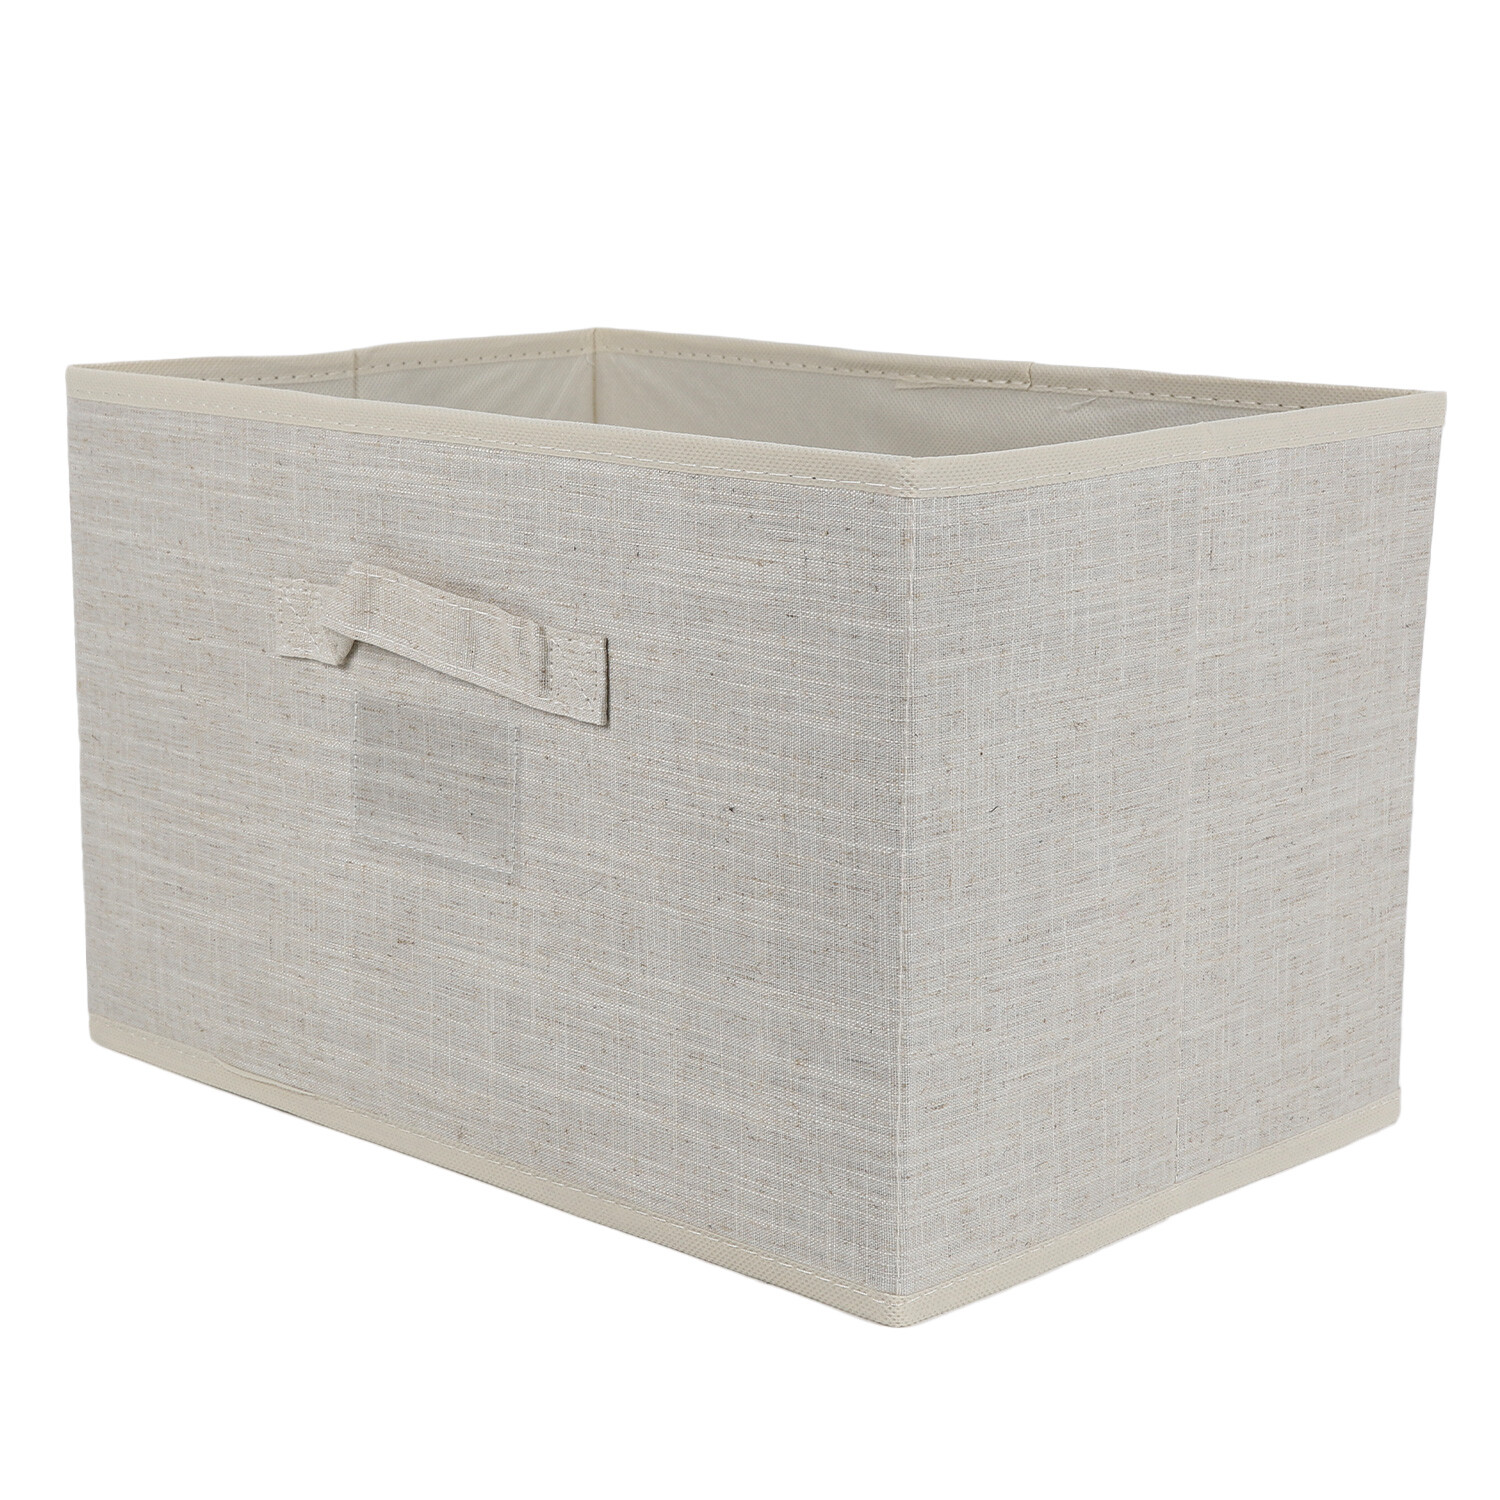 Large Linen Storage Box - Cream Image 2